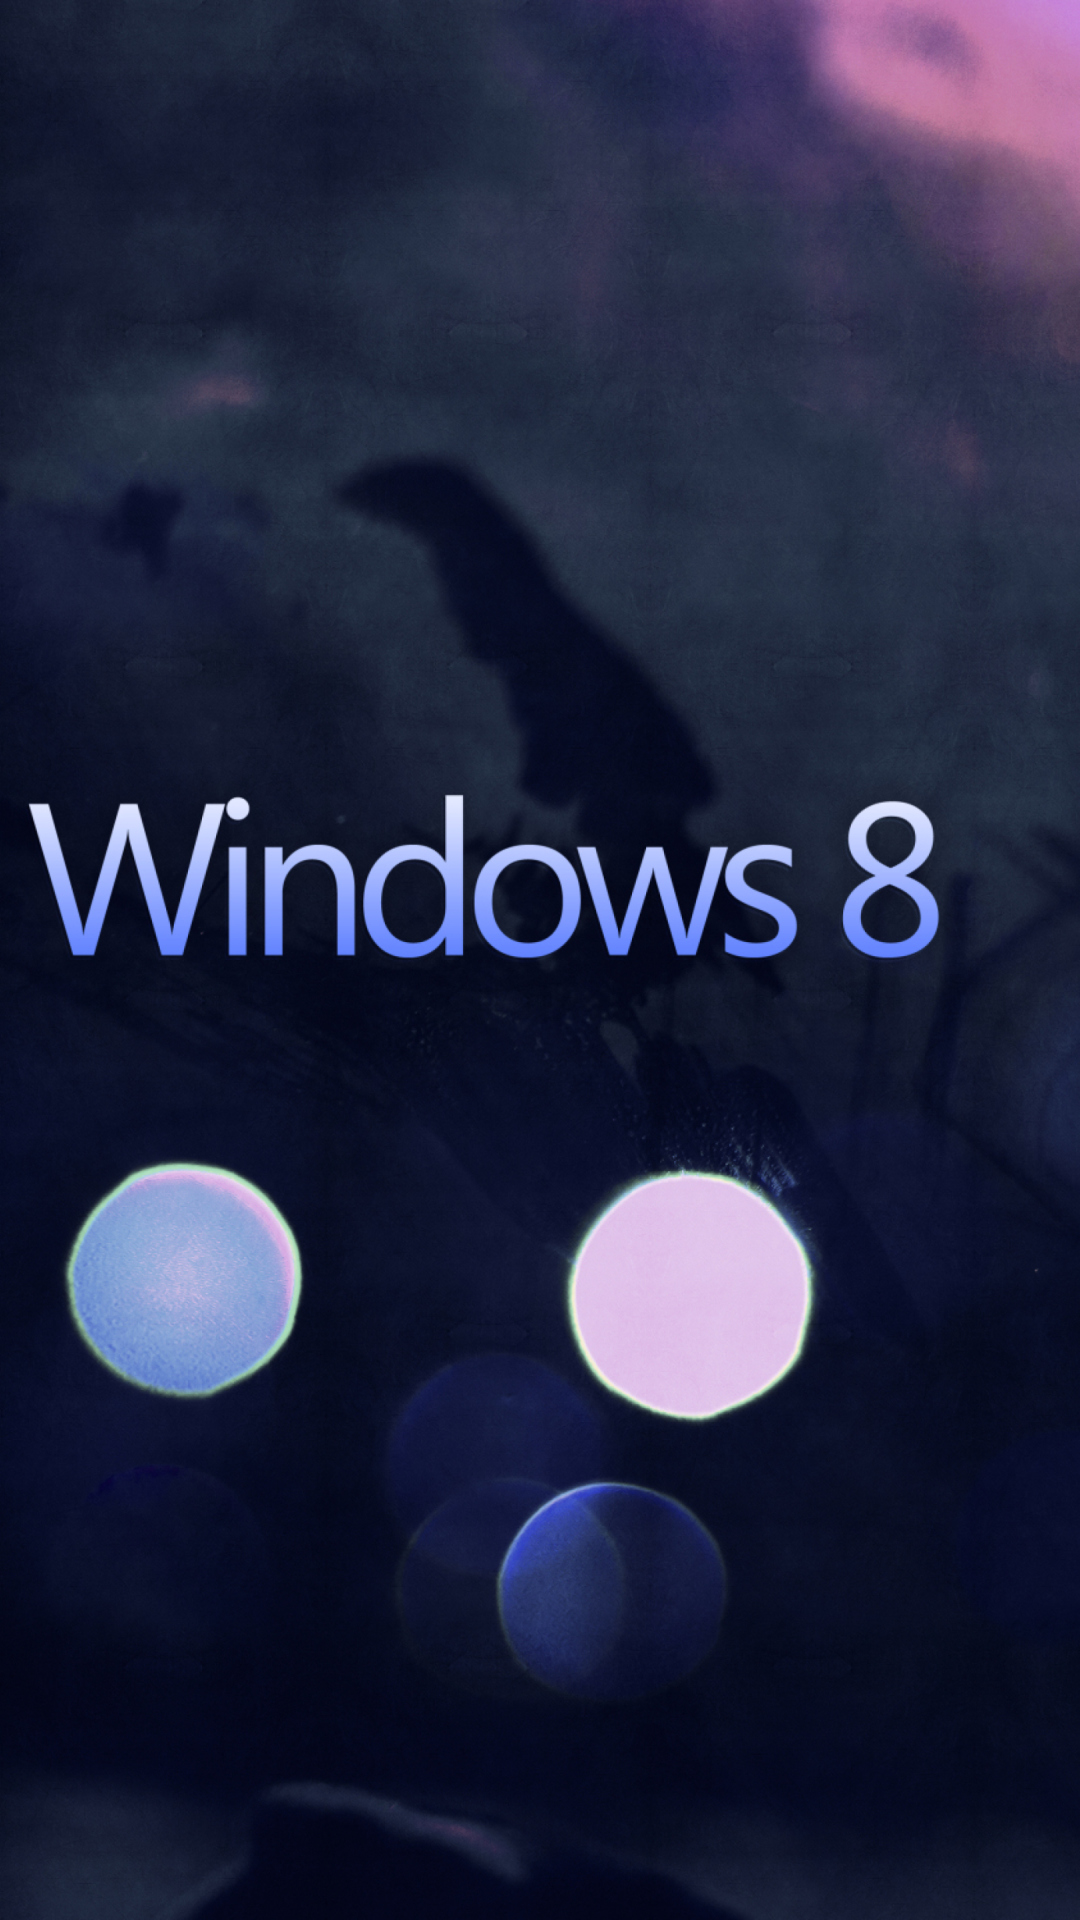 Windows 8 - Hi-Tech wallpaper 1080x1920